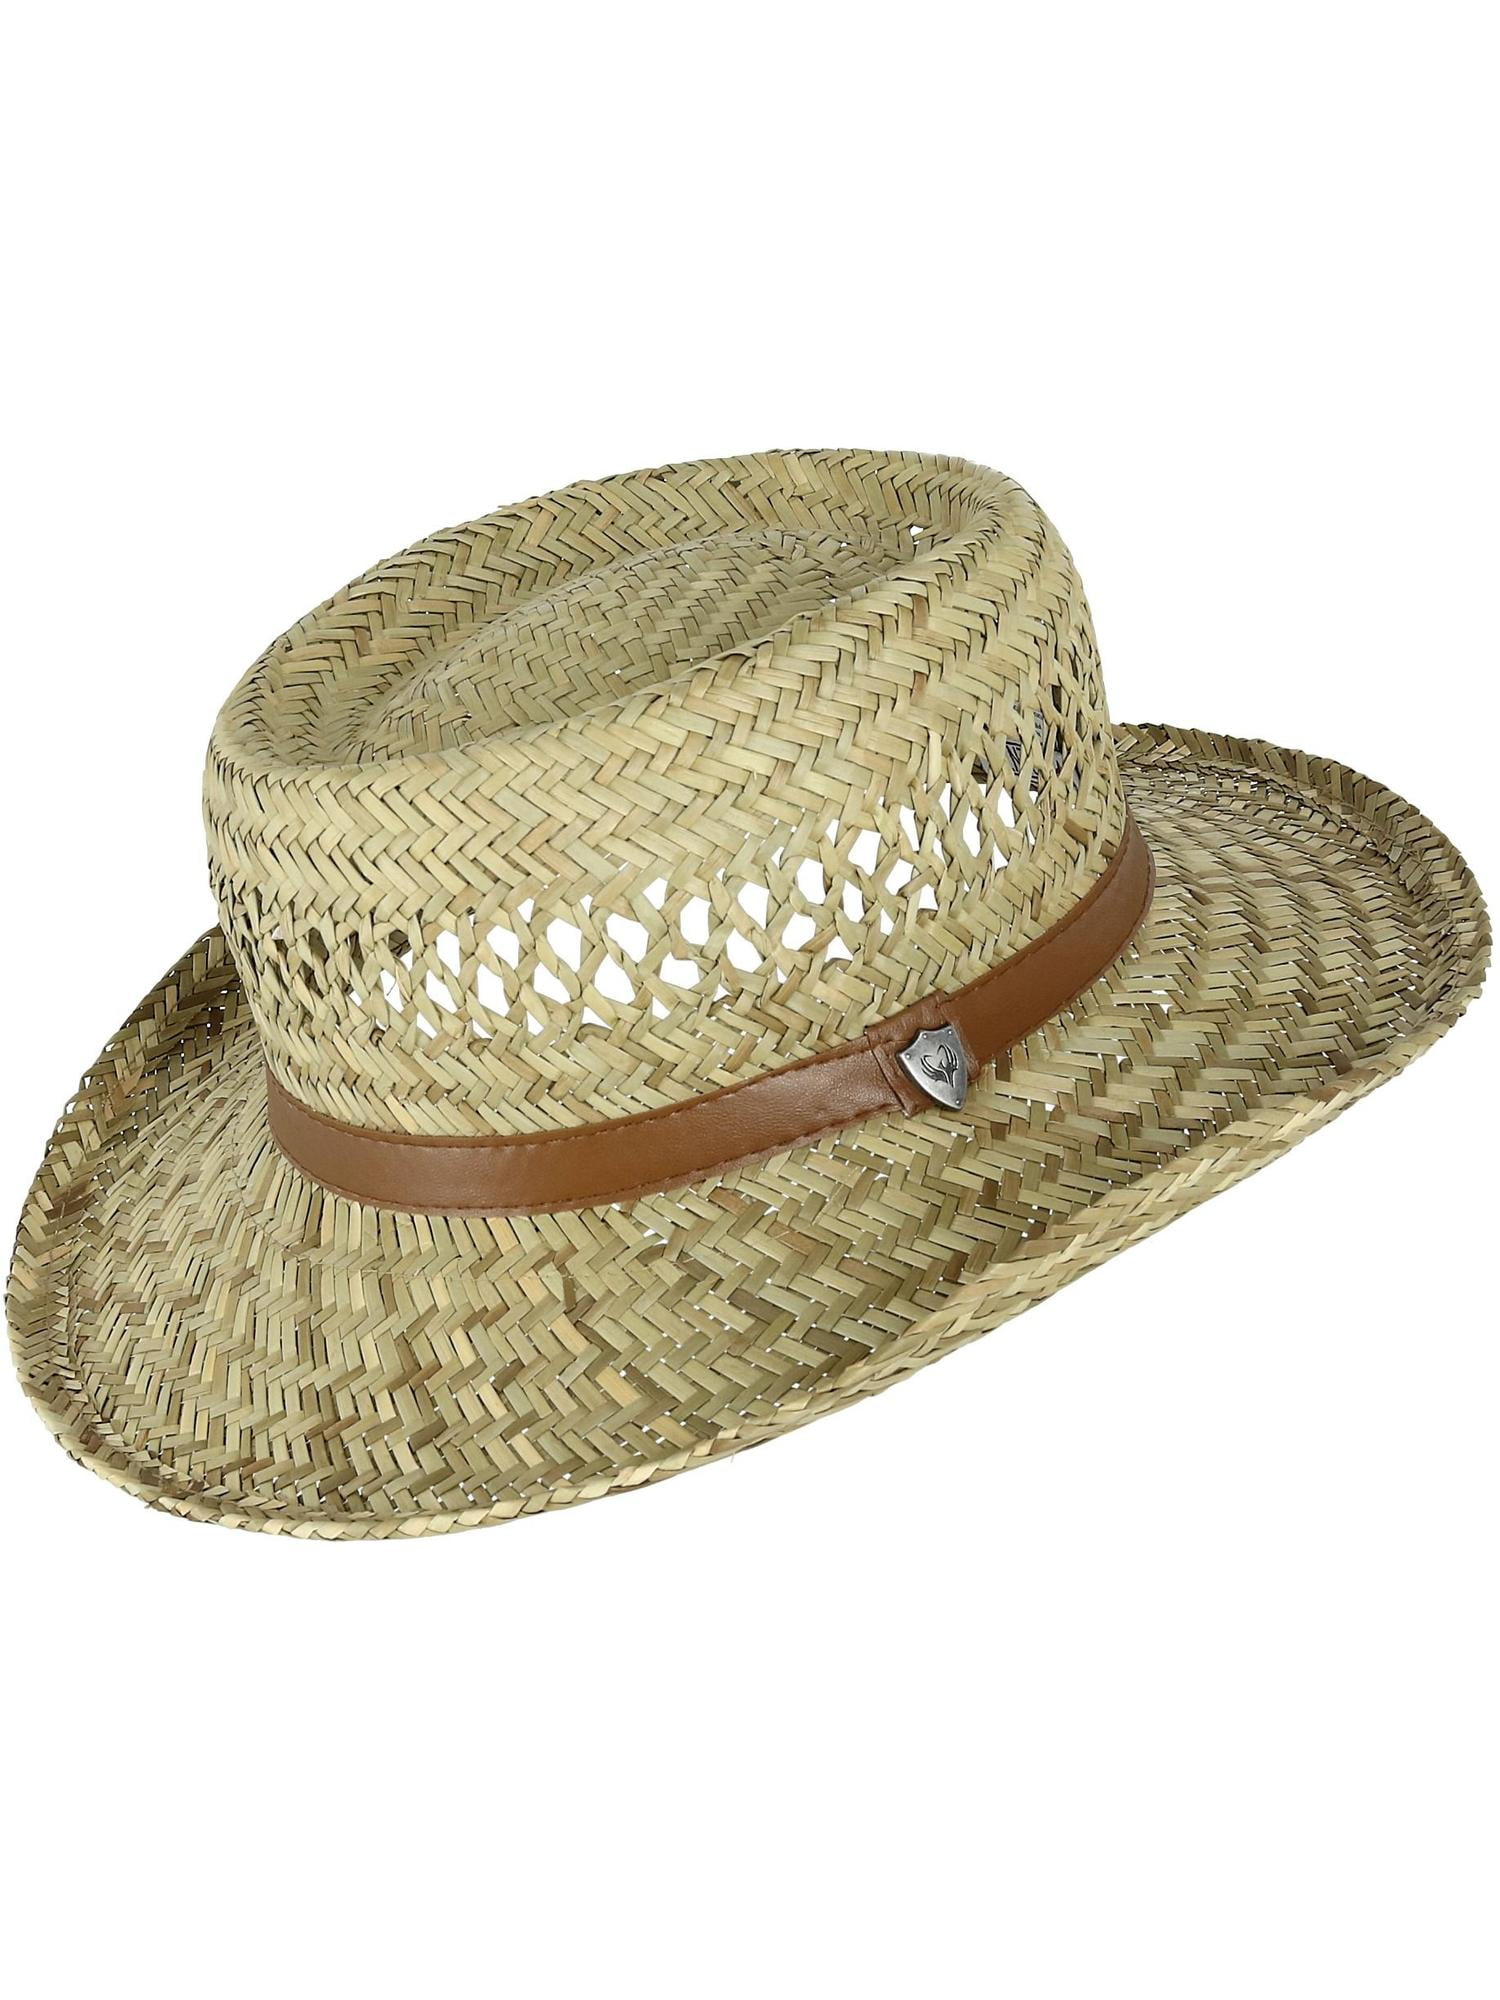 Gold Coast Rush Gambler Hat One Size - Natural 